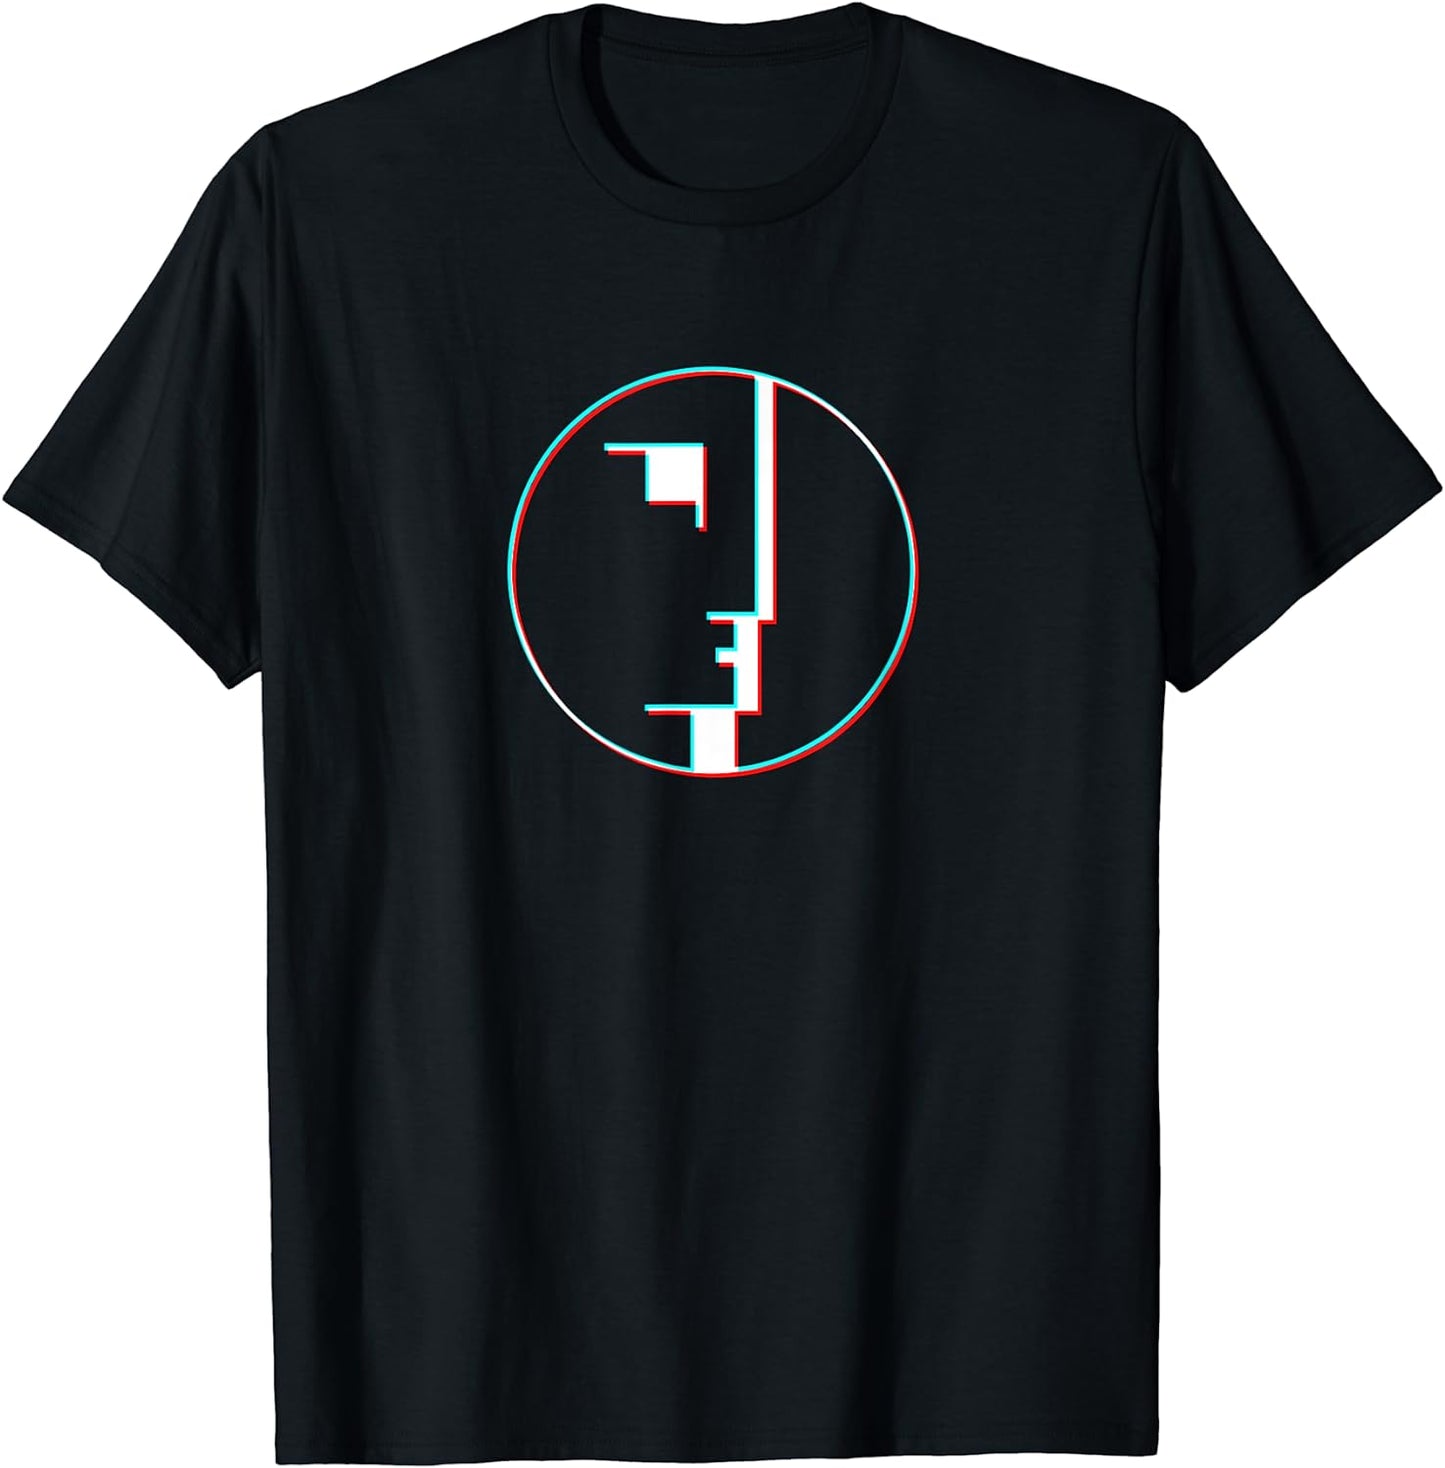 Bauhaus Logo Design Black Shirt Medium